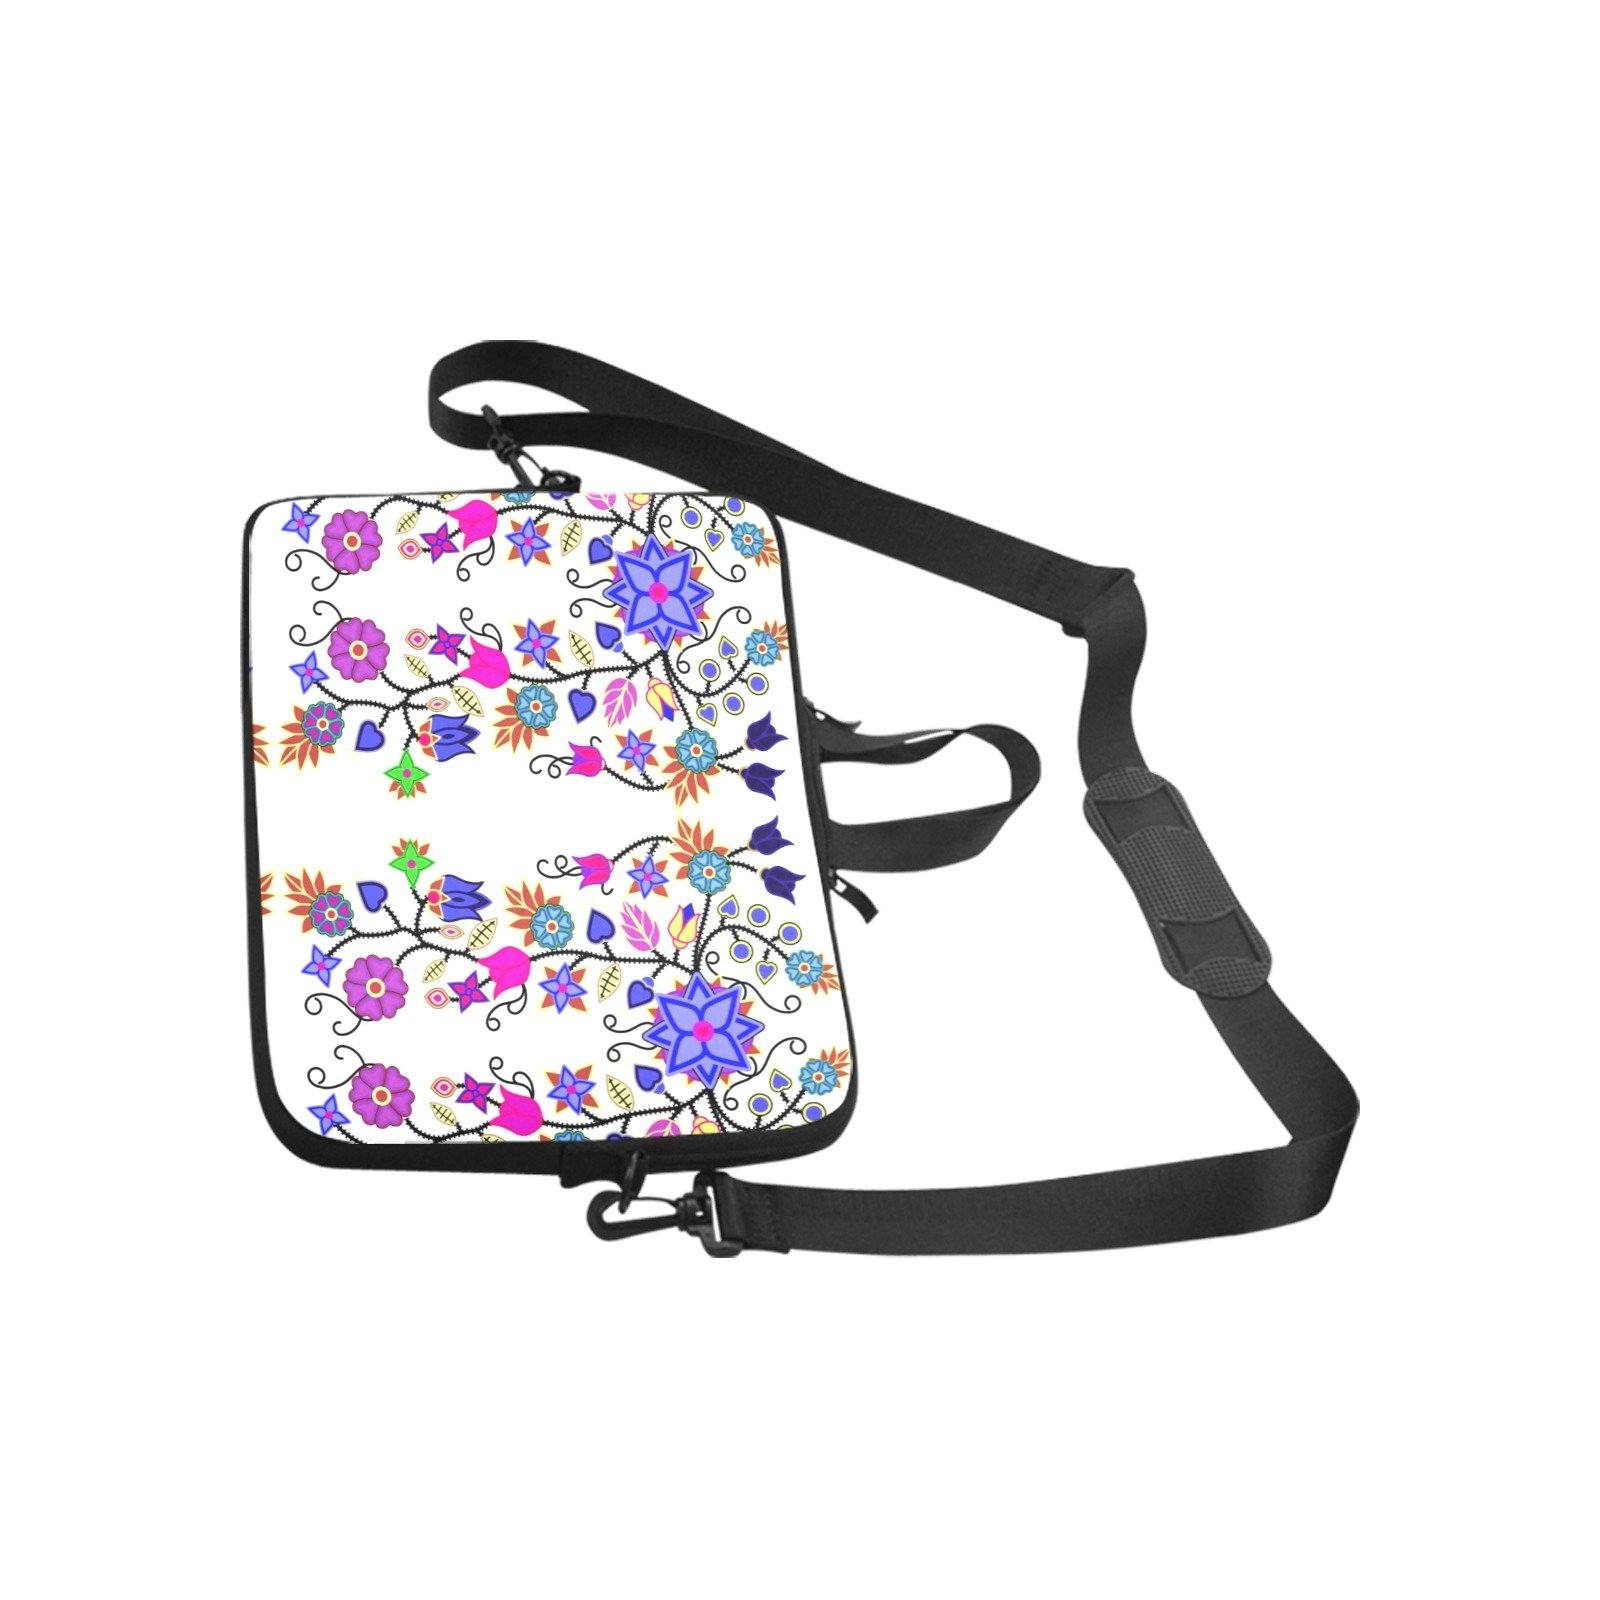 Floral Beadwork Seven Clans White Laptop Handbags 17" bag e-joyer 